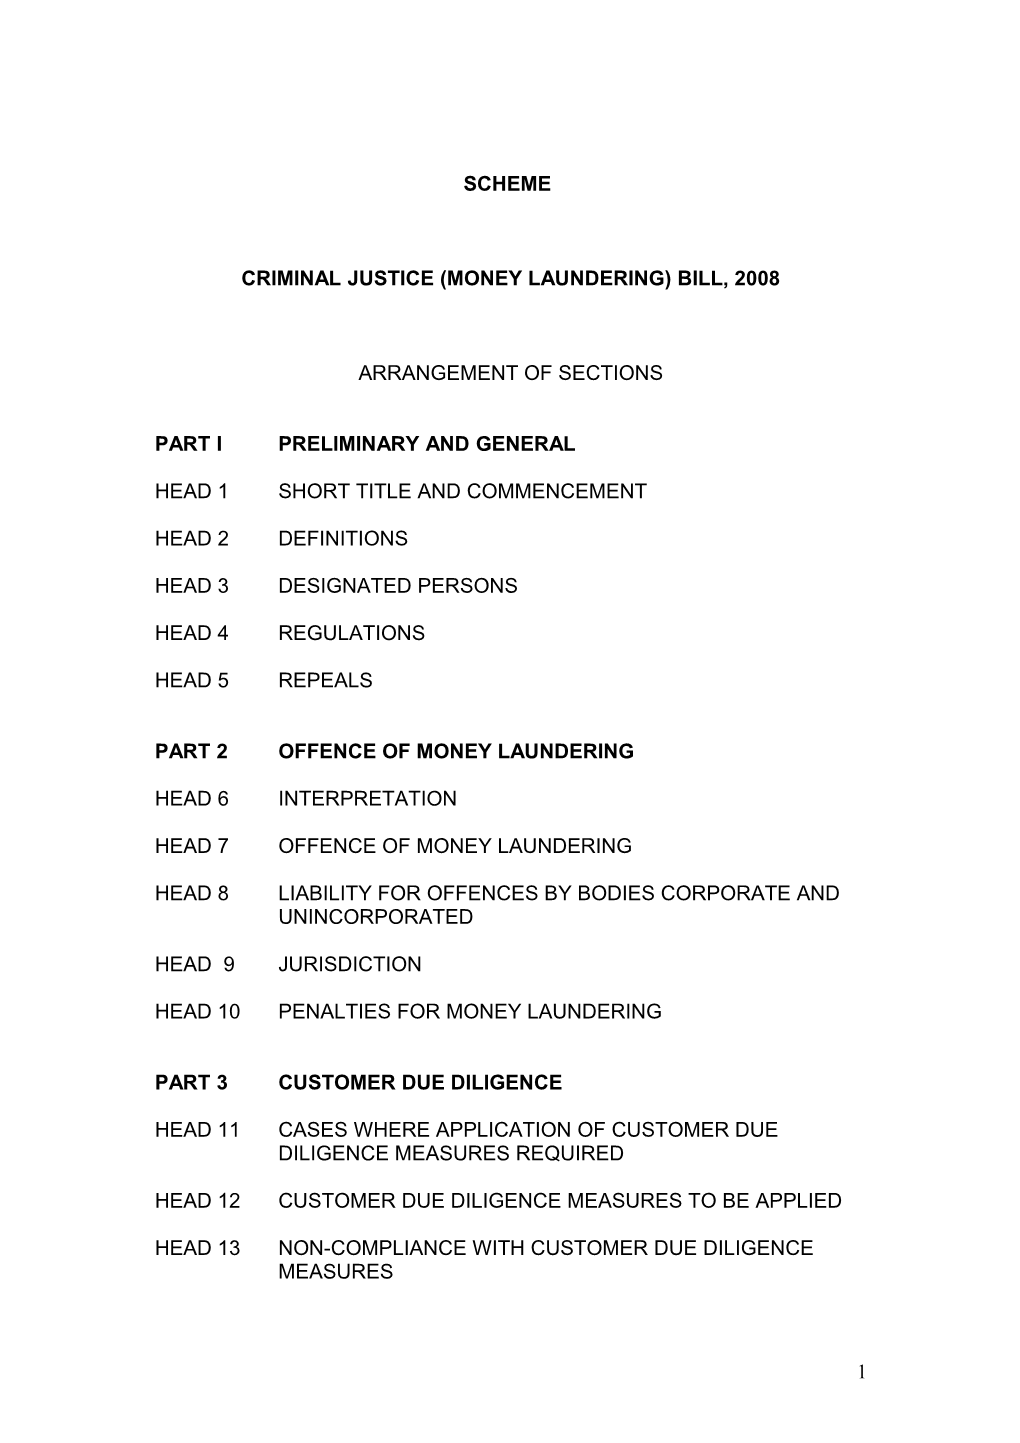 Criminal Justice (Money Laundering) Bill, 2008